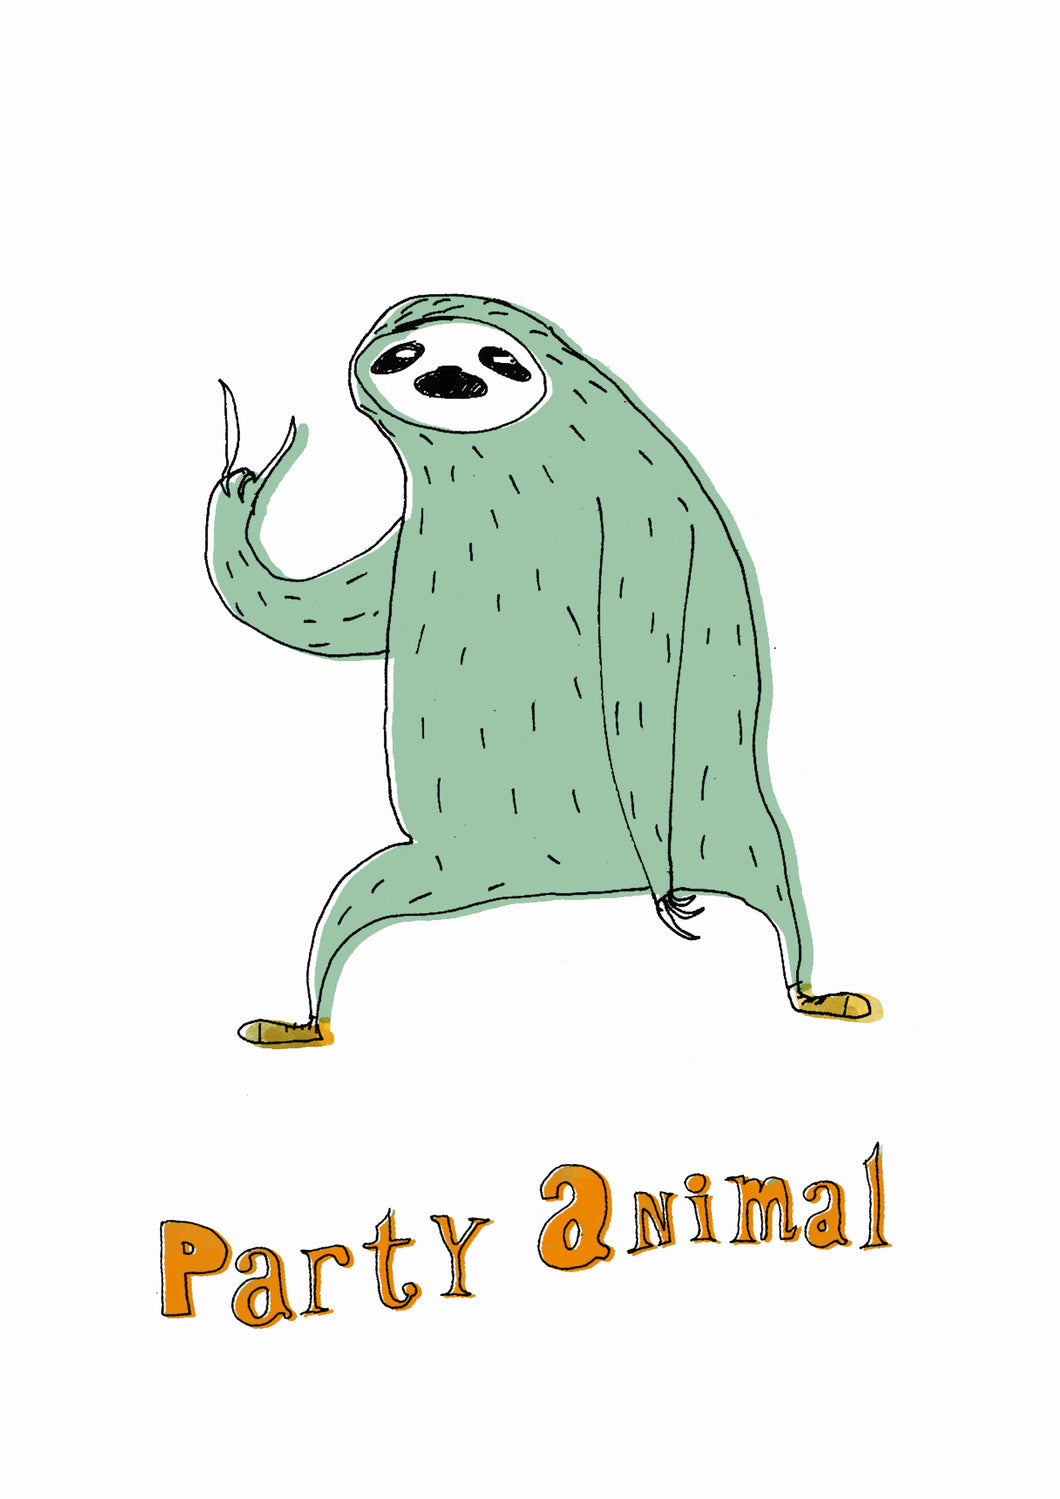 Party Animal Print